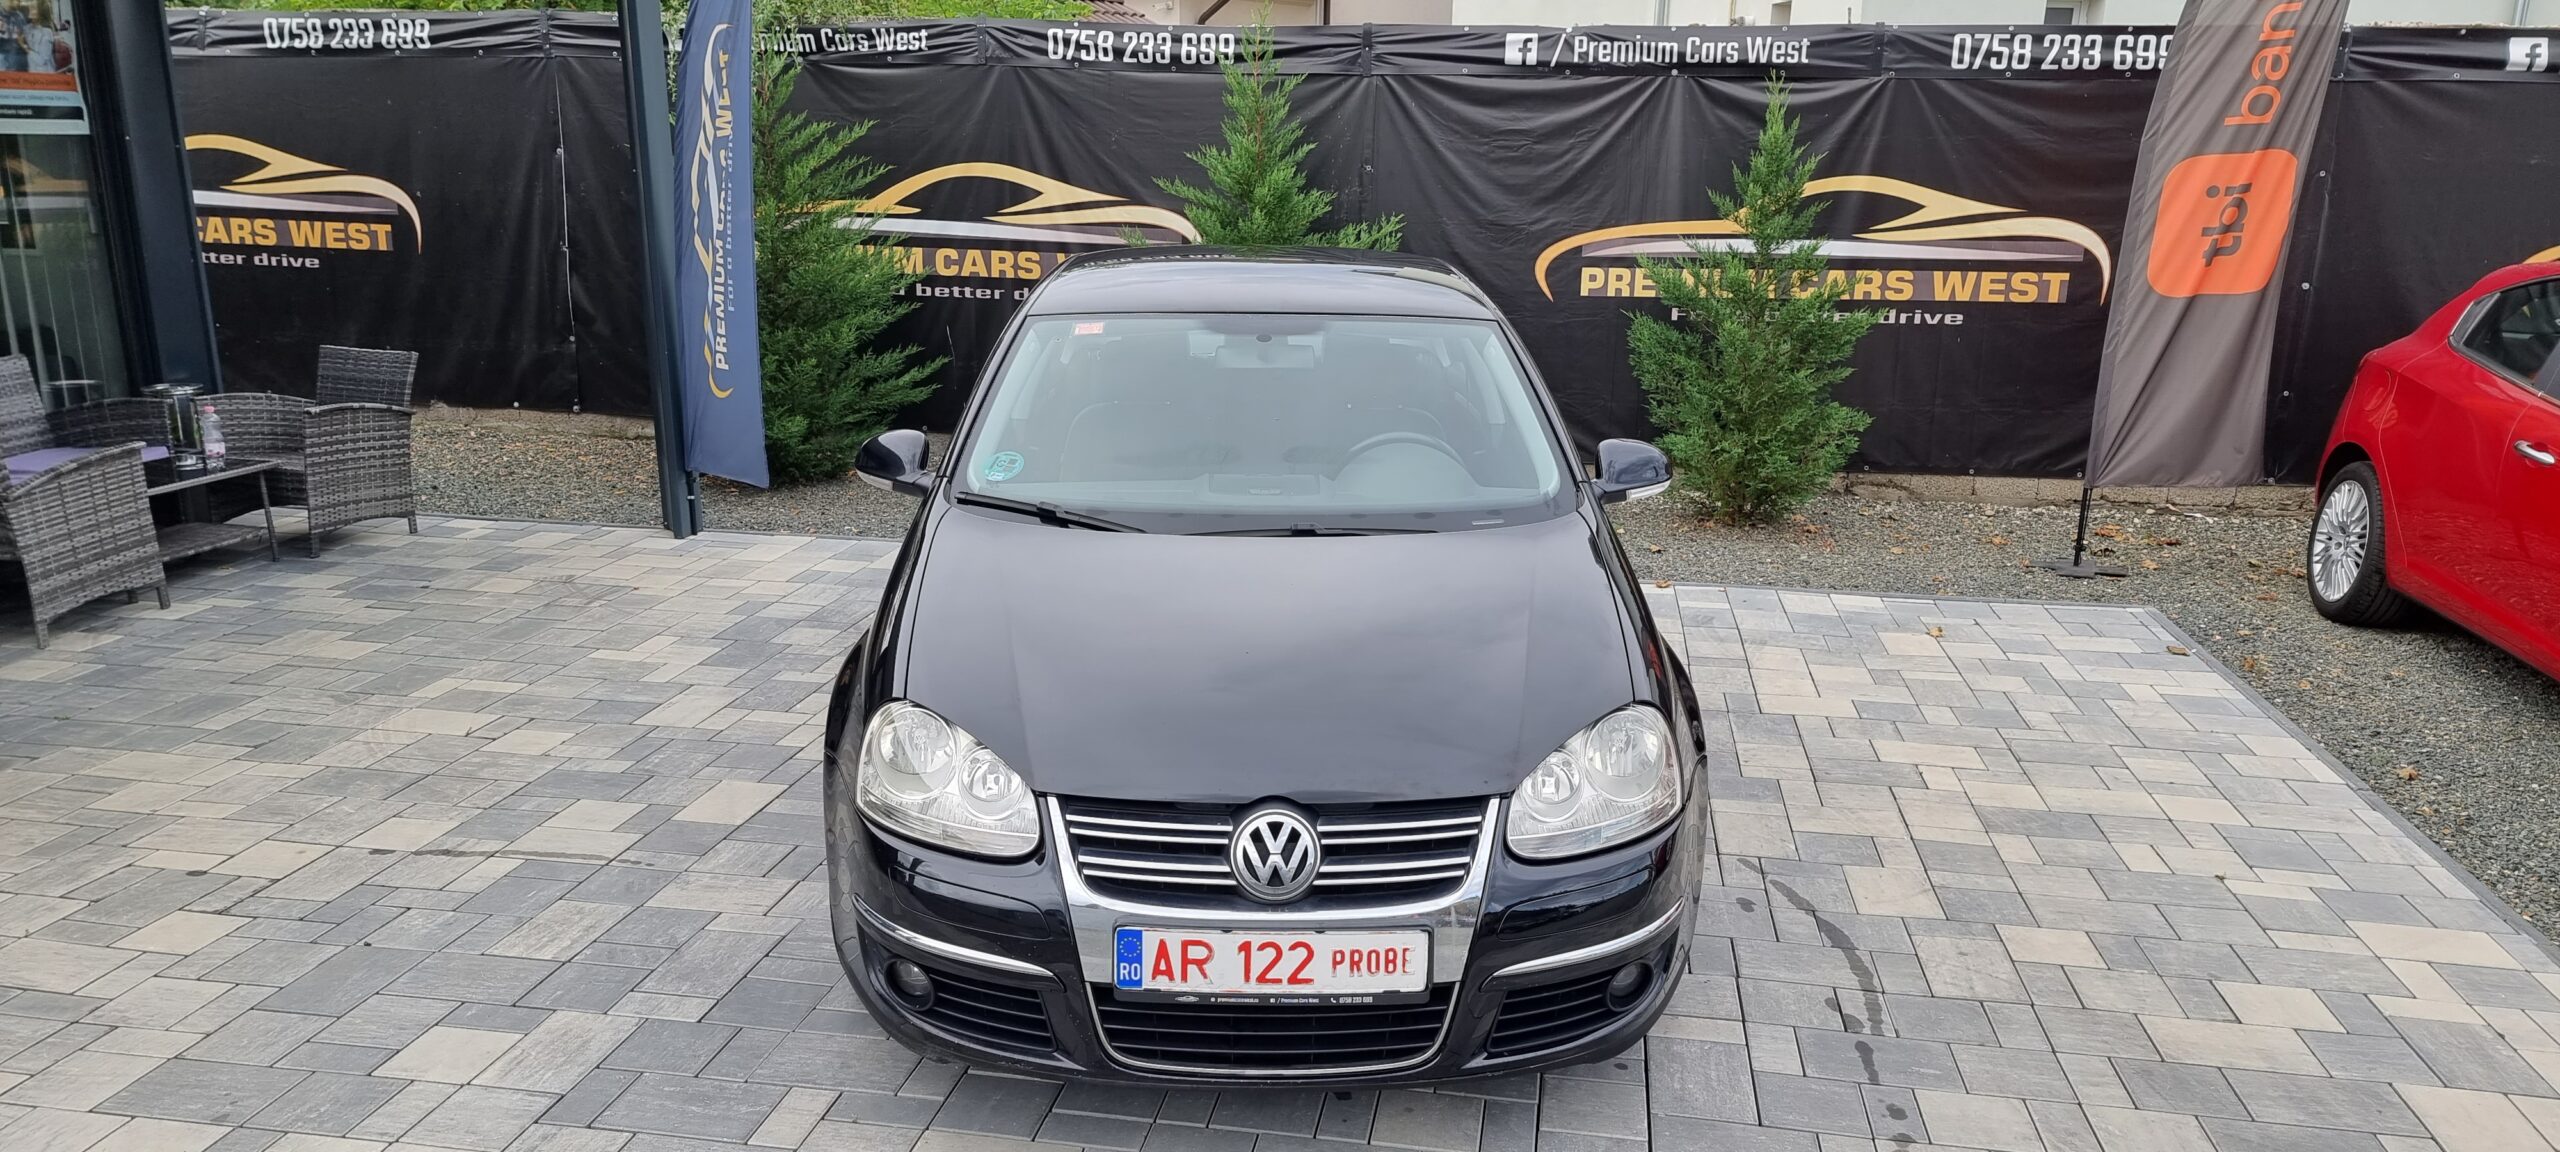 VW JETTA 1.6 BENZINA, 116 CP, EURO 4, AN 2006